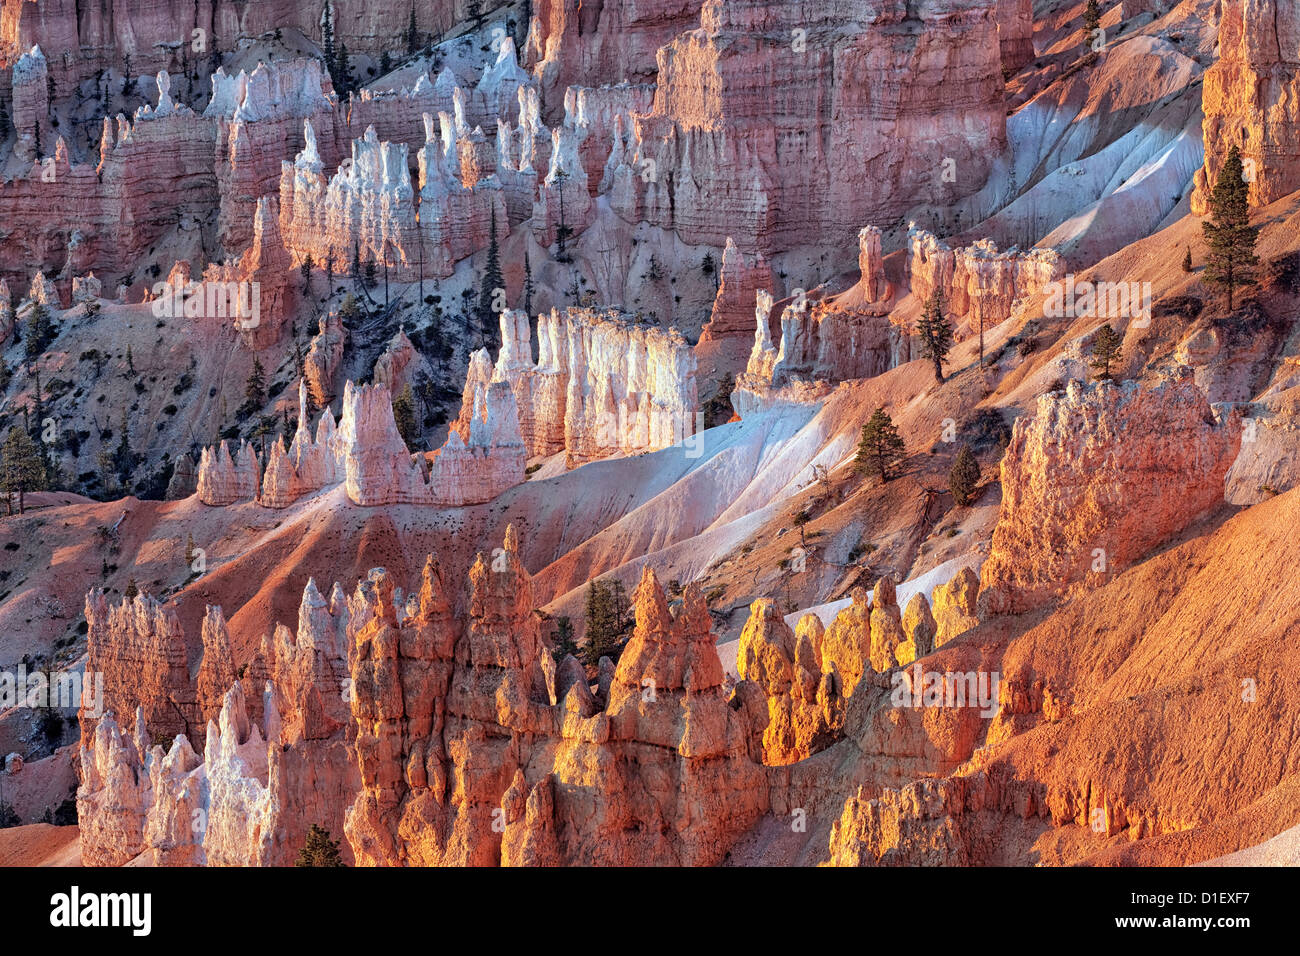 Reflective first light illuminates the amphitheater of hoodoos in Utah’s Bryce Canyon National Park. Stock Photo